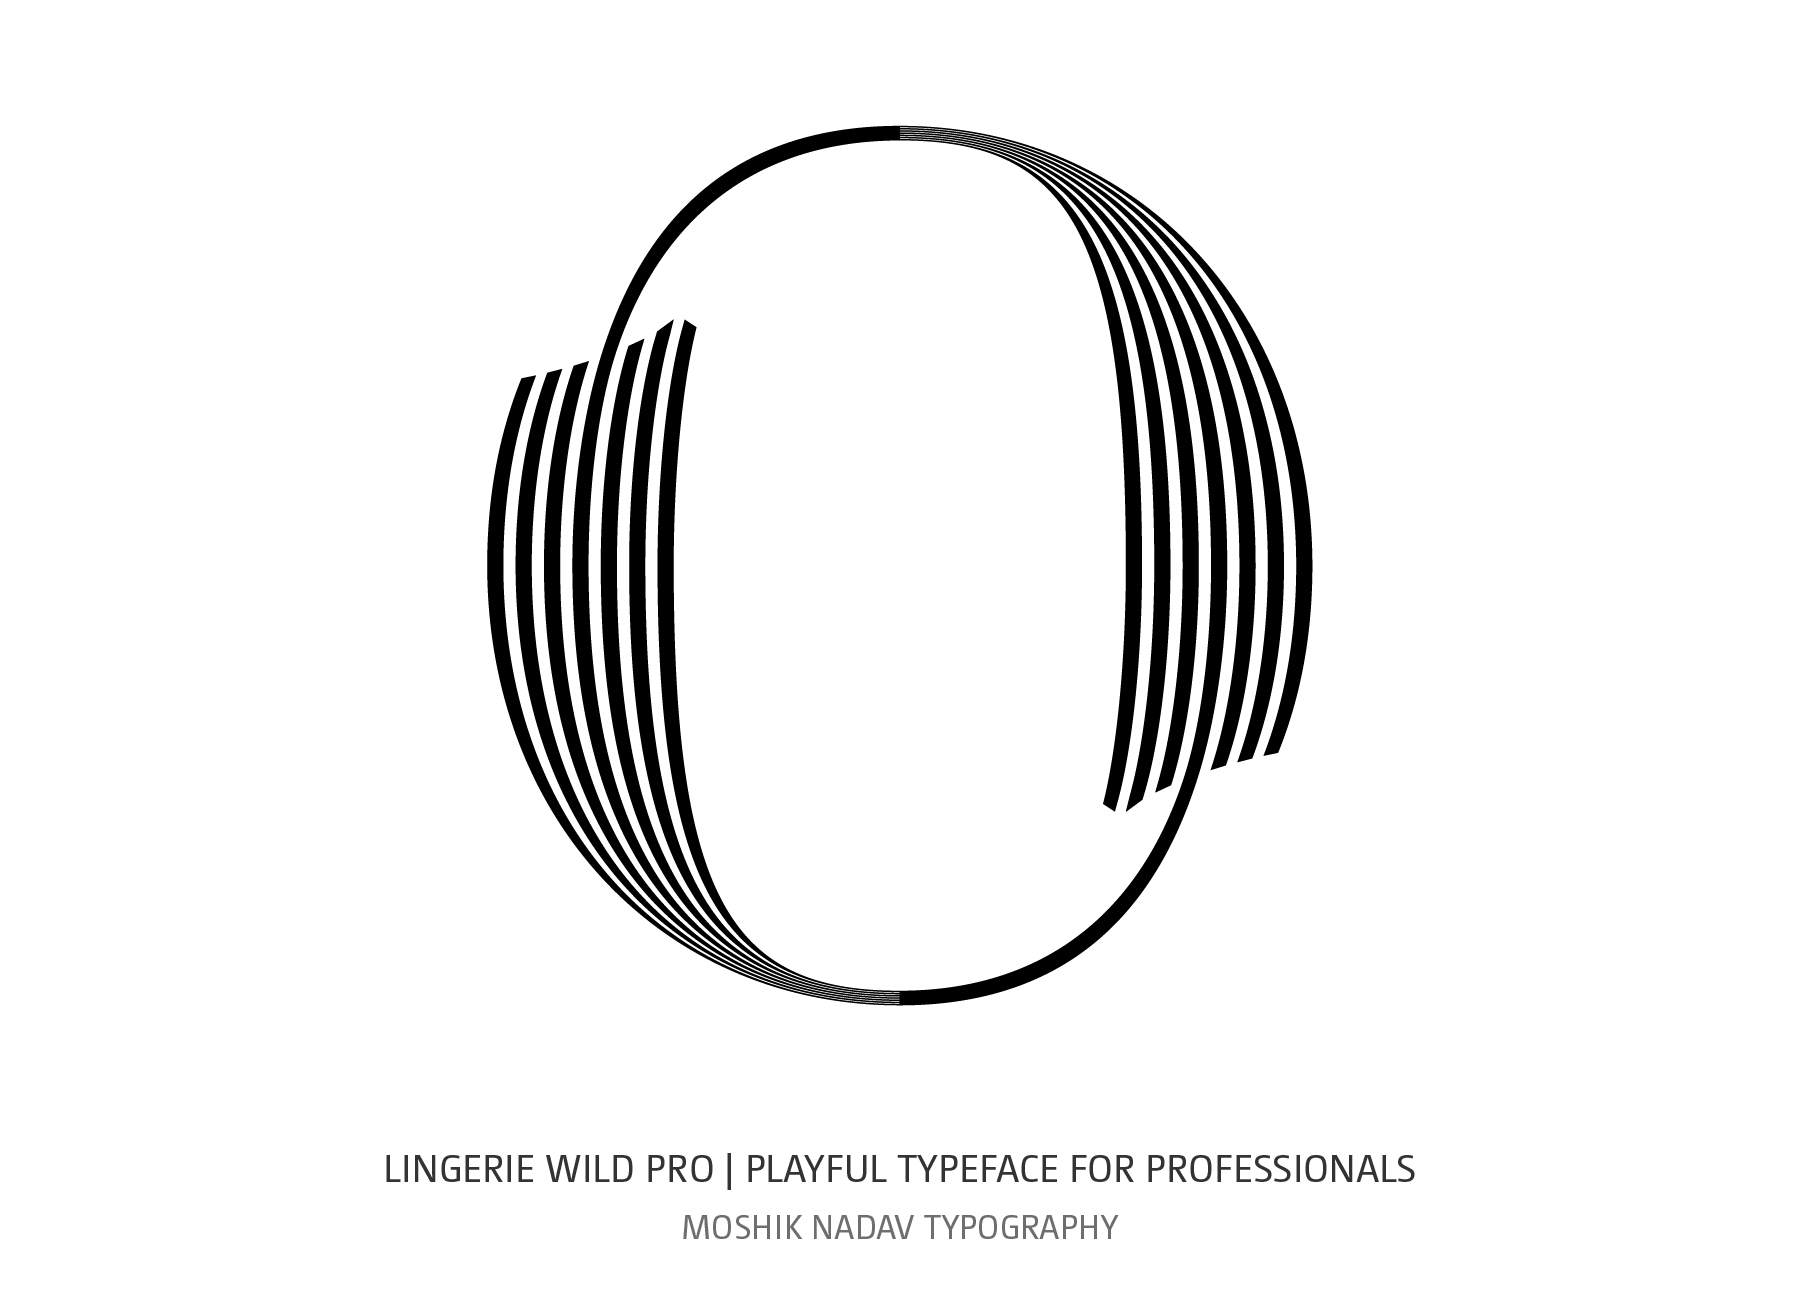 Lingerie Wild Pro Typeface uppercase O designed for Fashion magazines and logos by Moshik Nadav